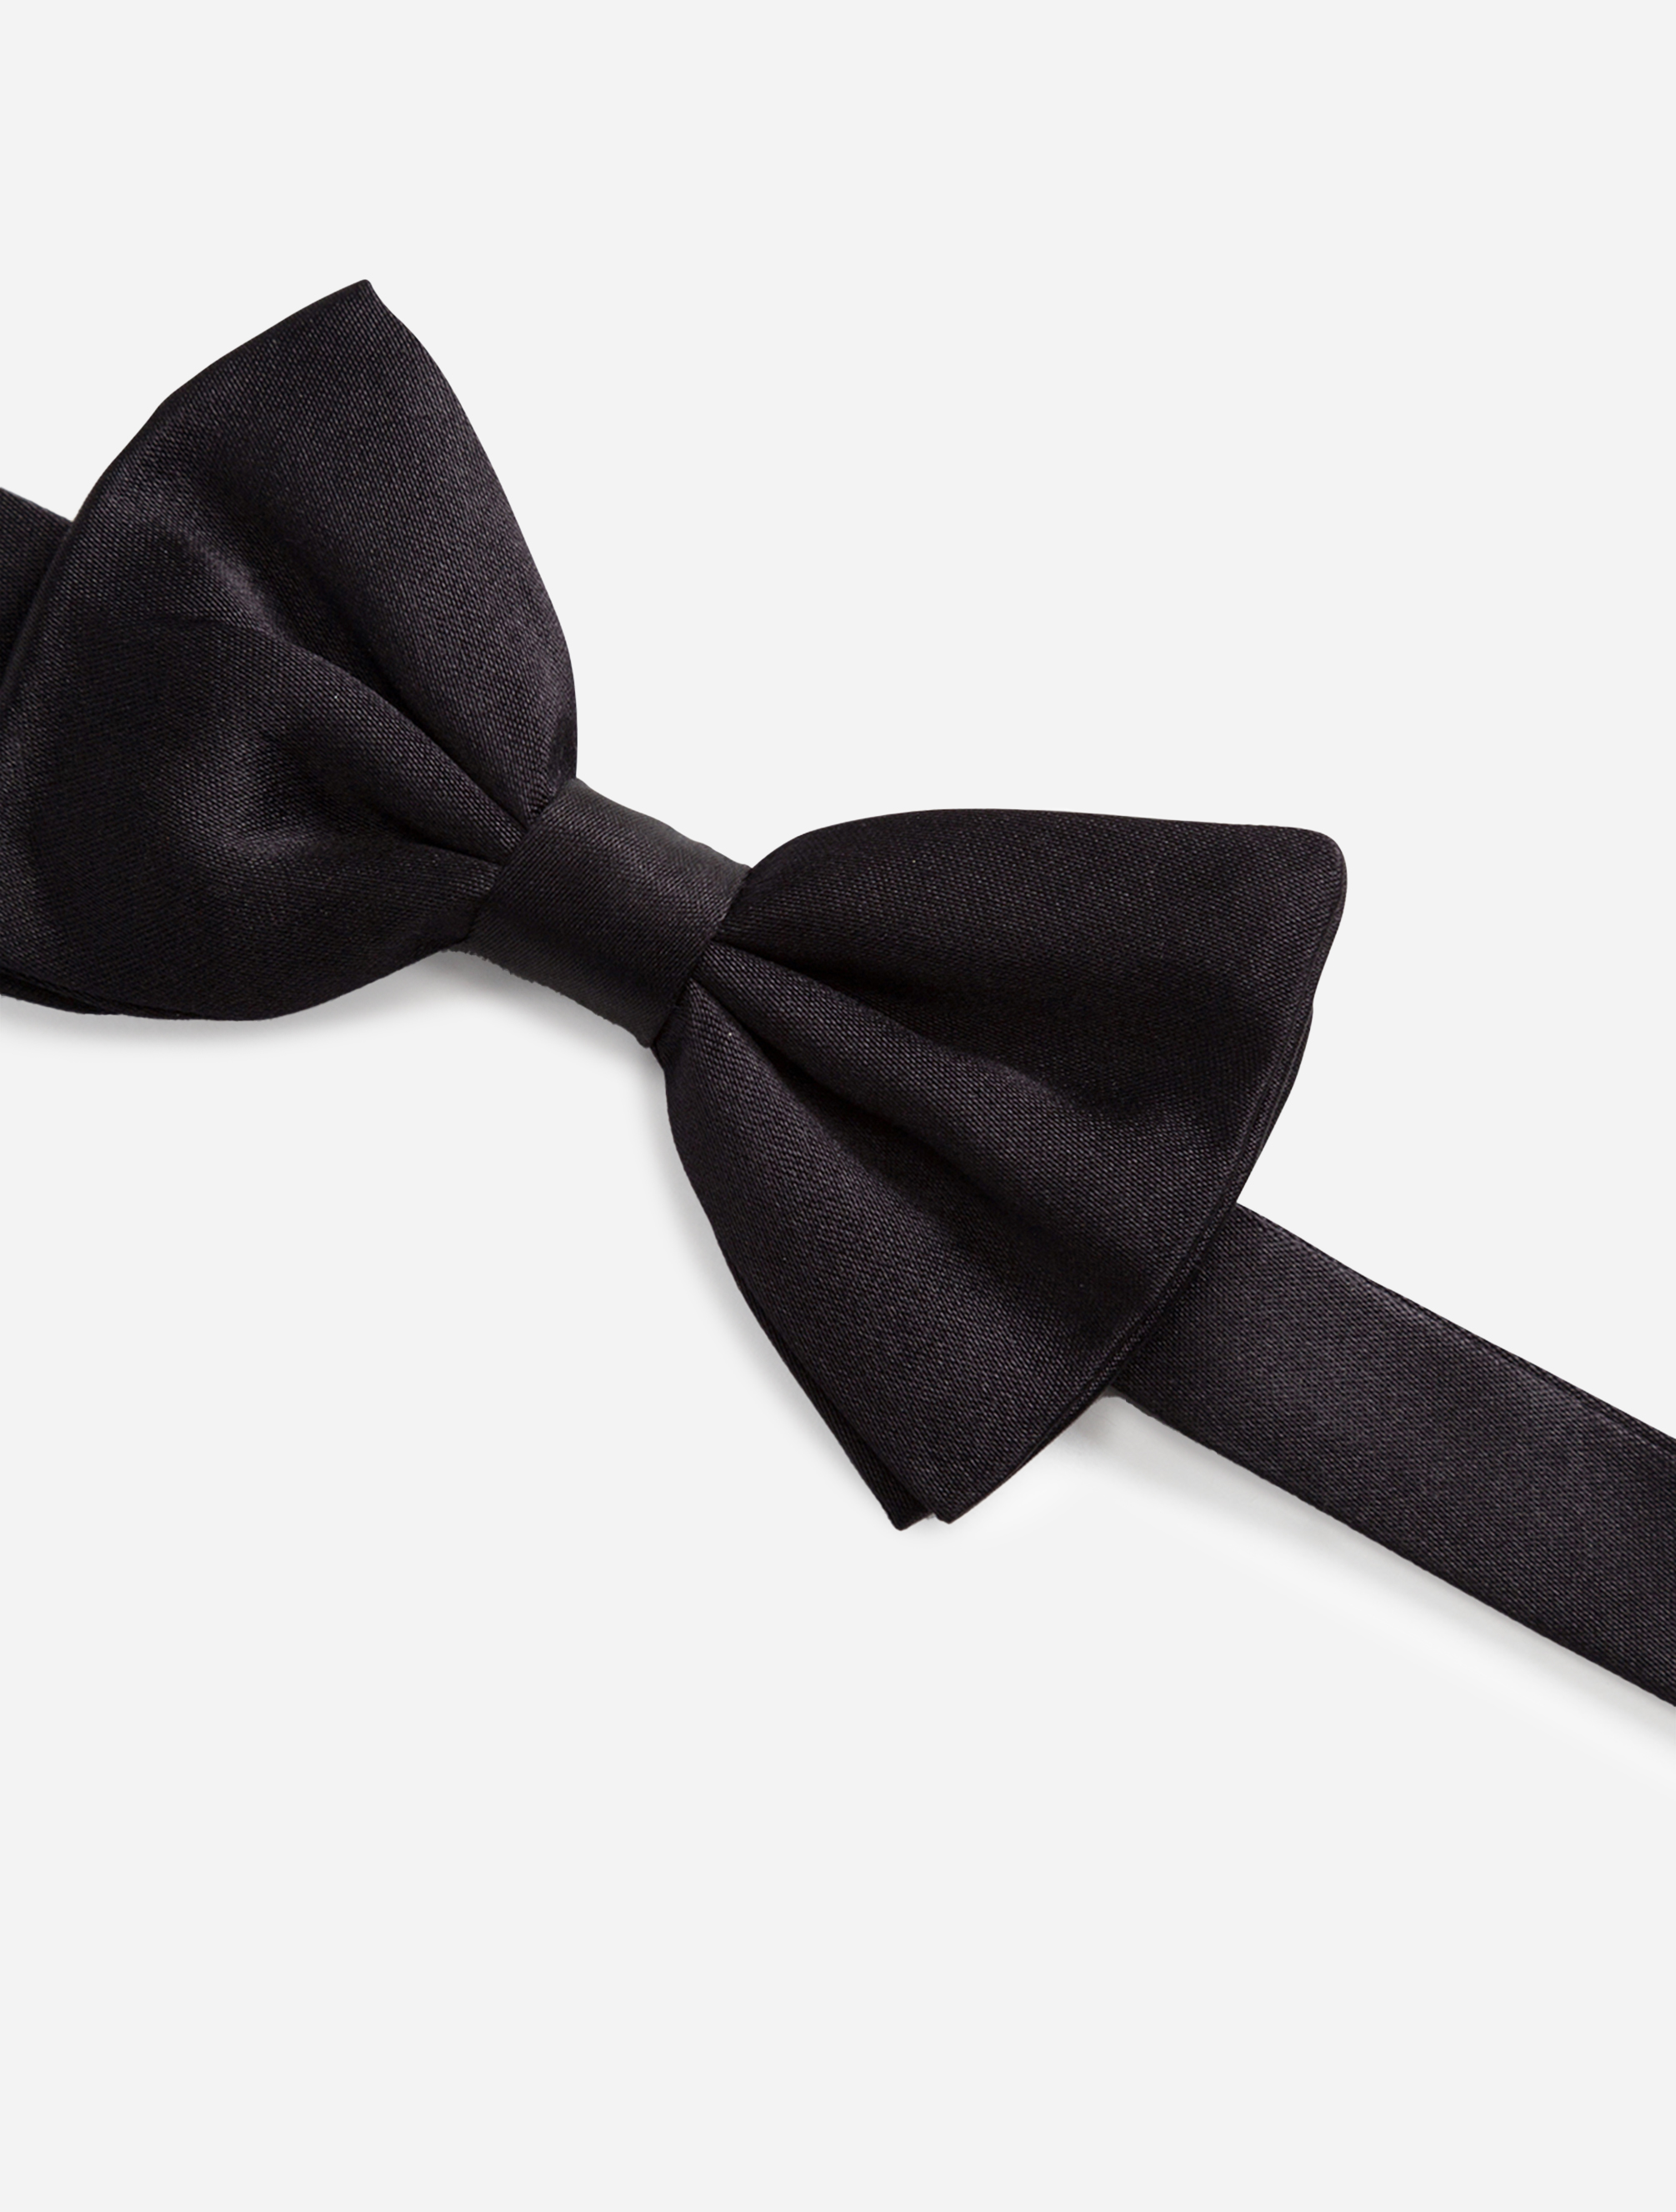 Silk bow tie in Black